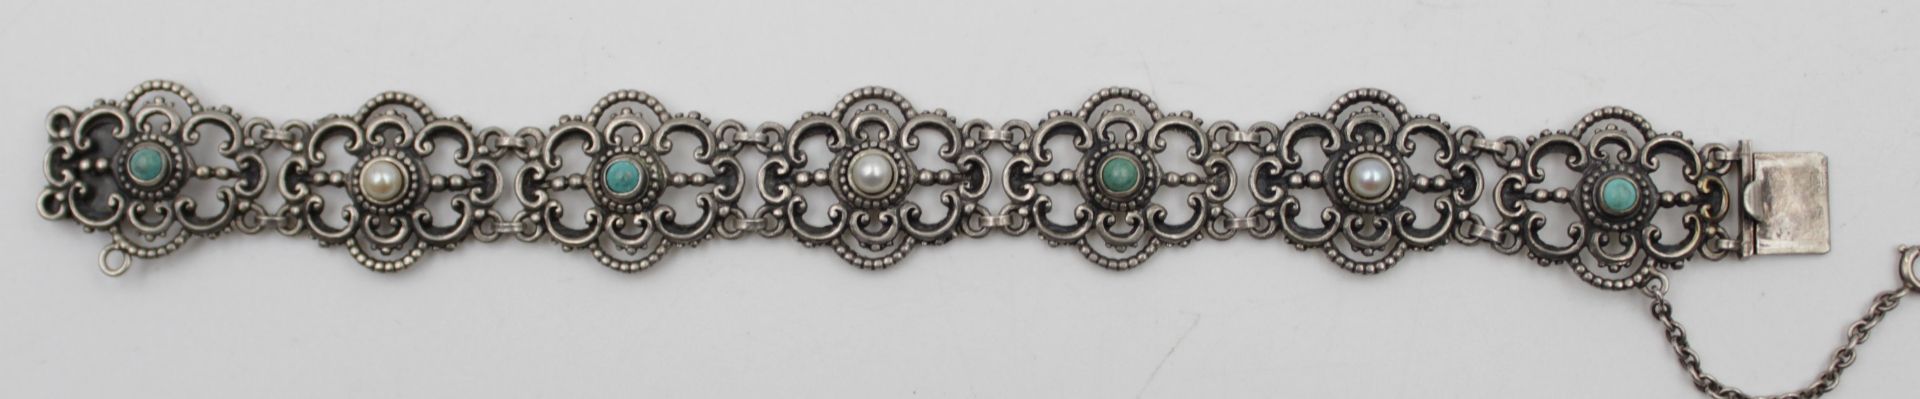 835er Silber-Armband, Türkise und Perlen, älter, 21,3gr., ca. L-18,5cm. 0